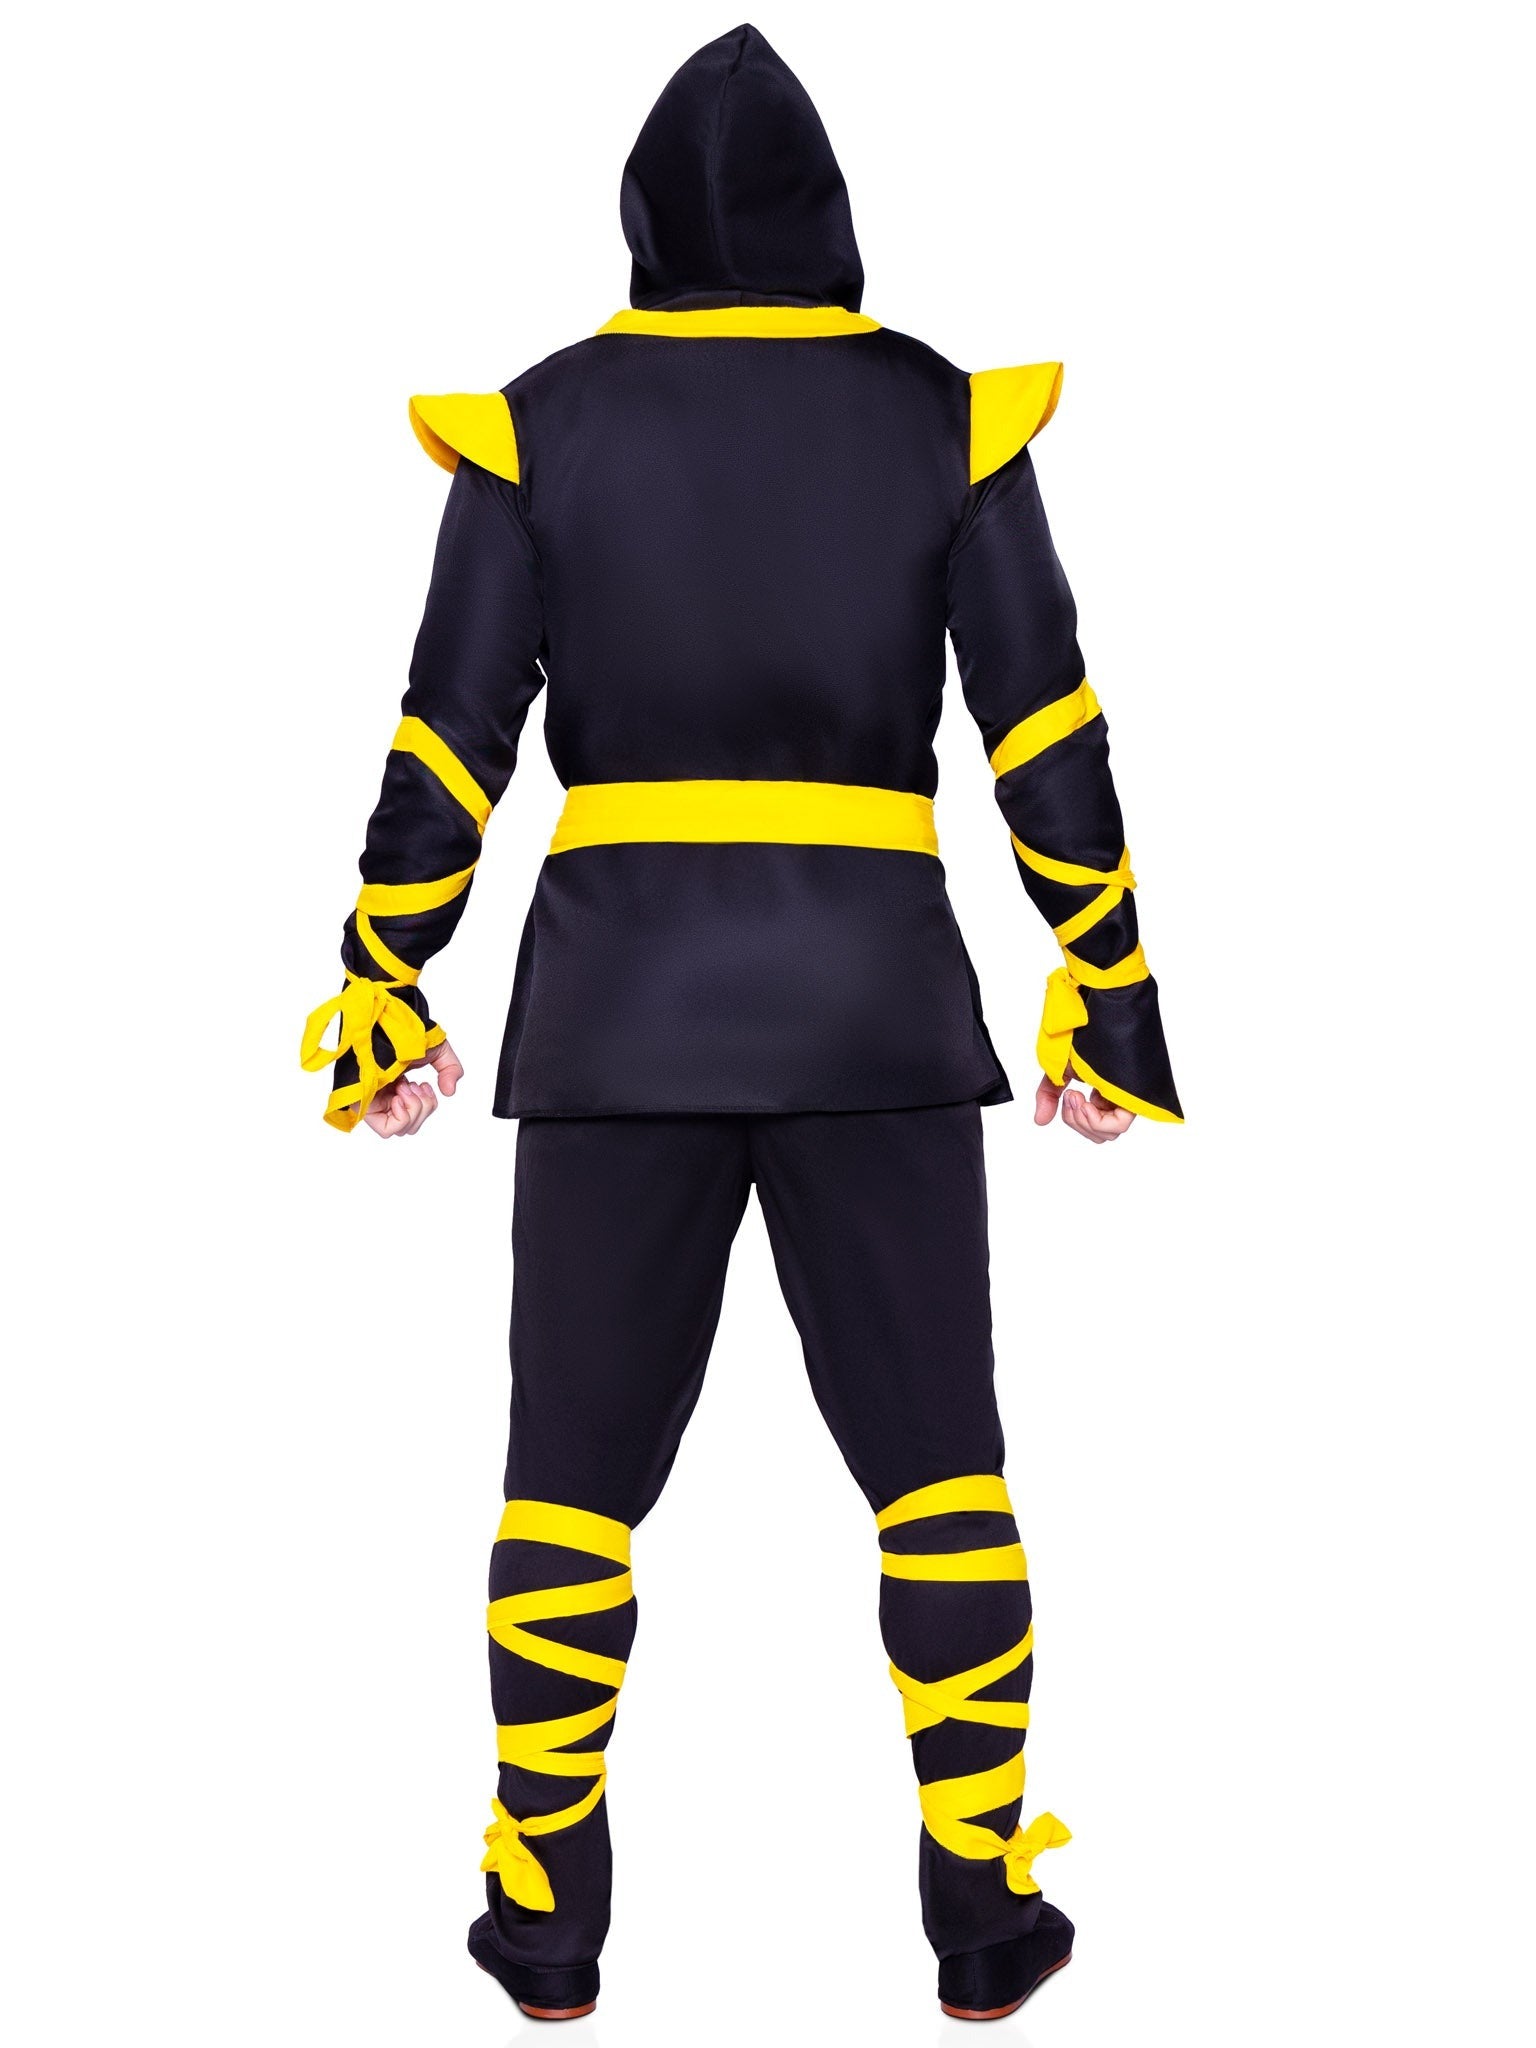 Ninja costume Assassin size XL